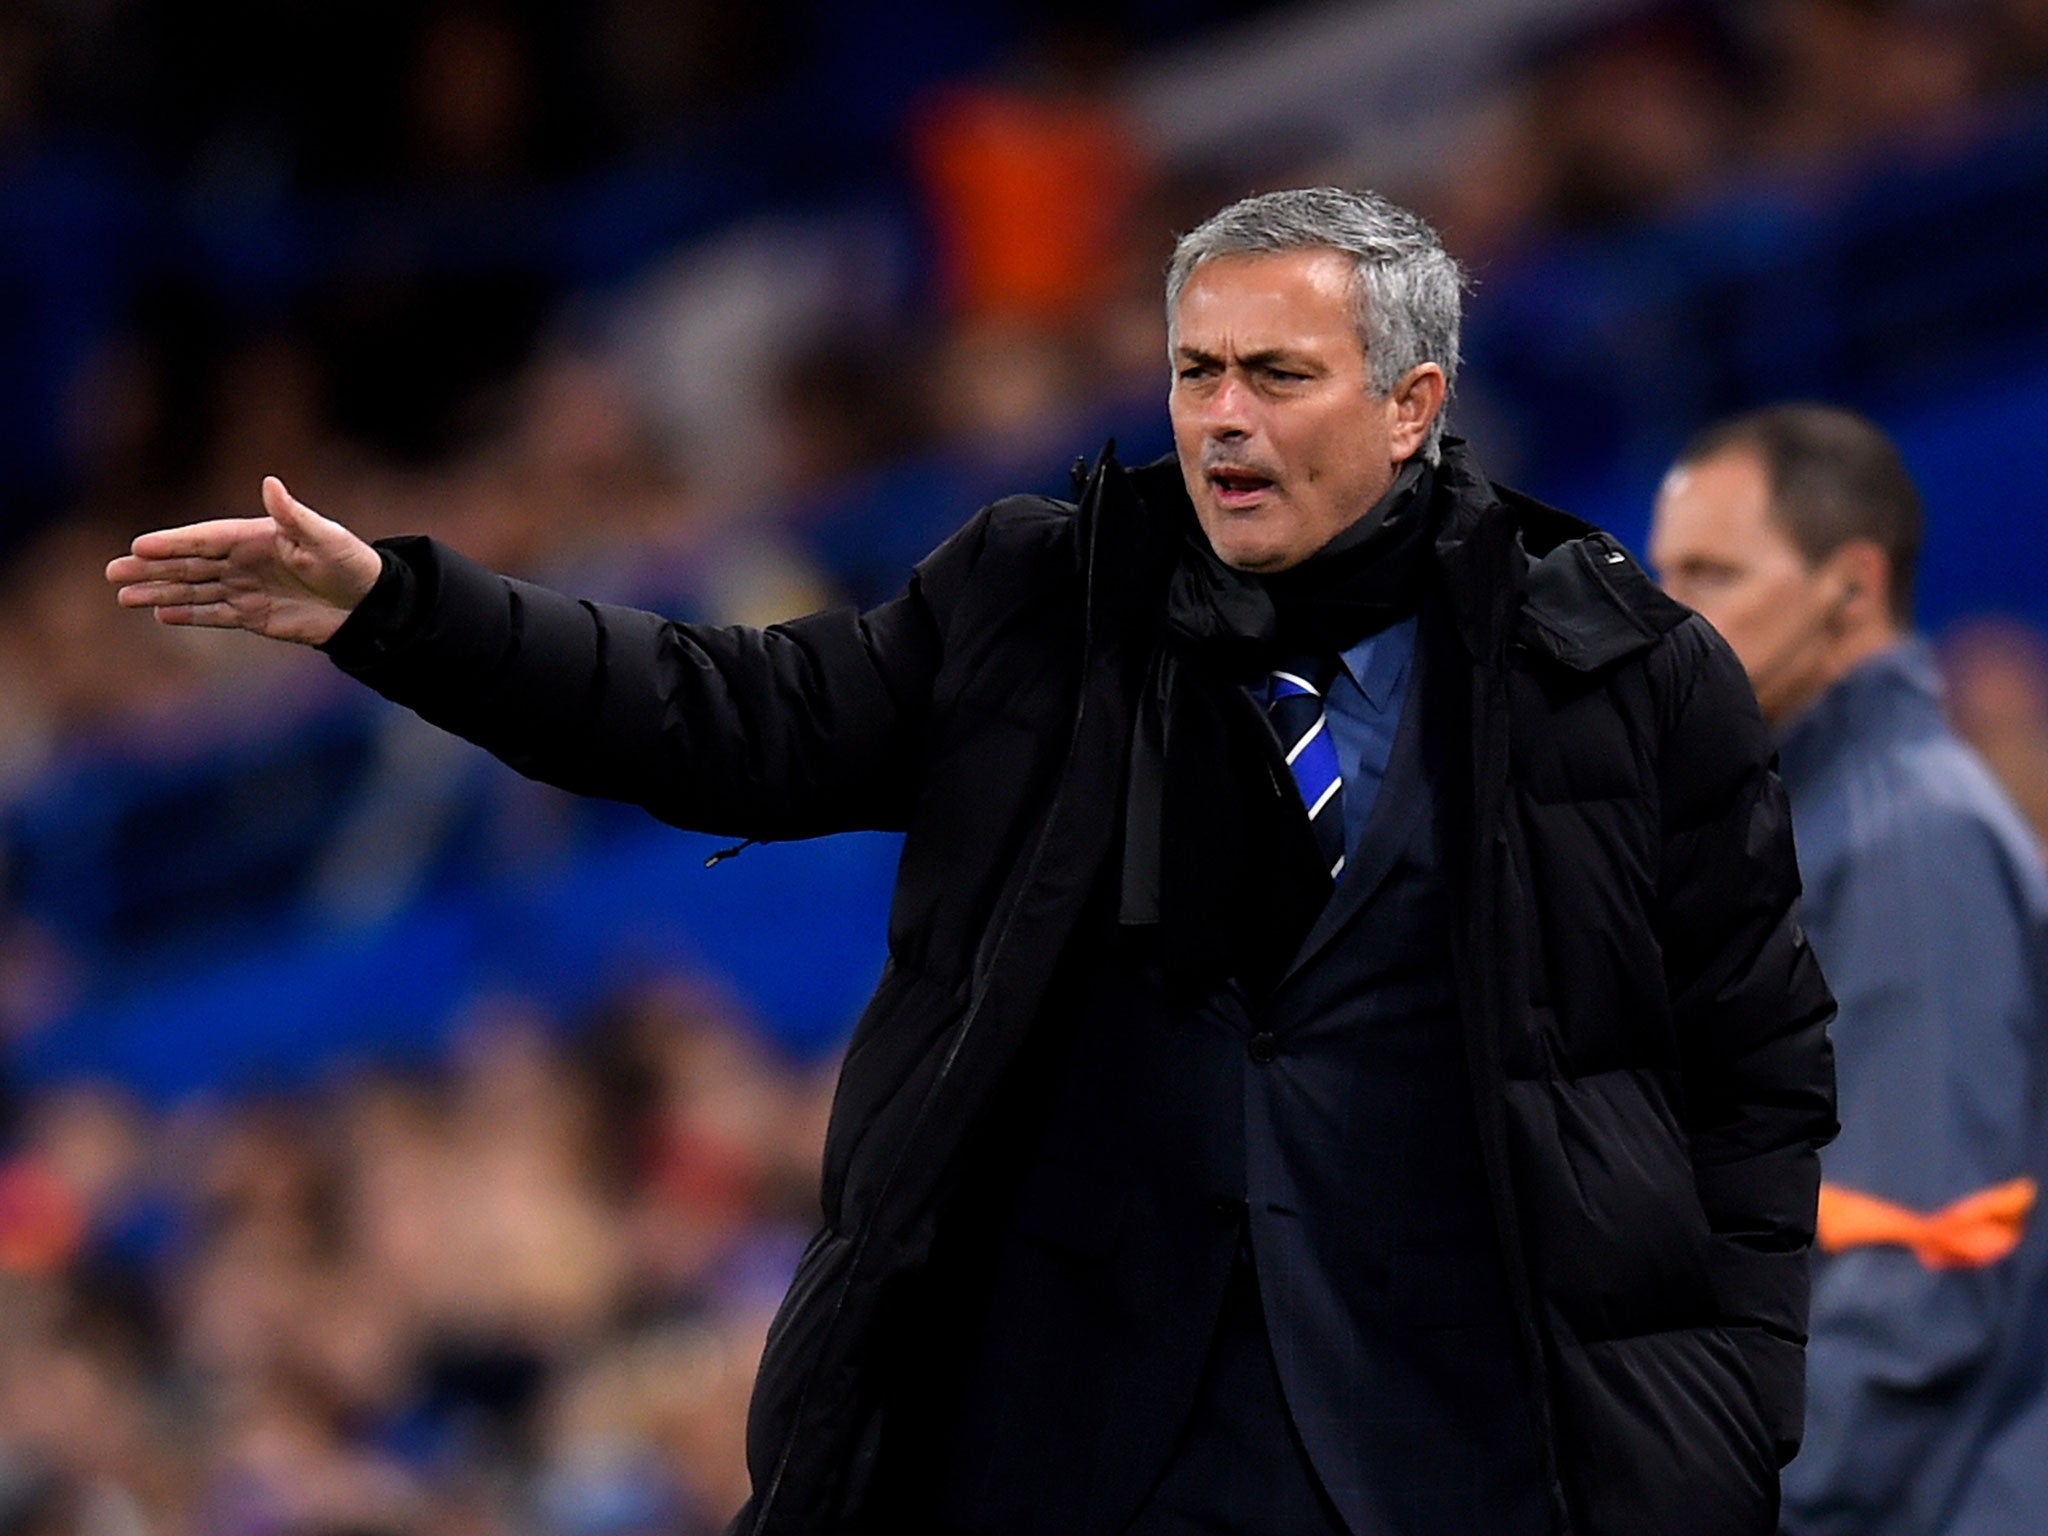 Jose Mourinho's Chelsea take on Louis van Gaal's Manchester United